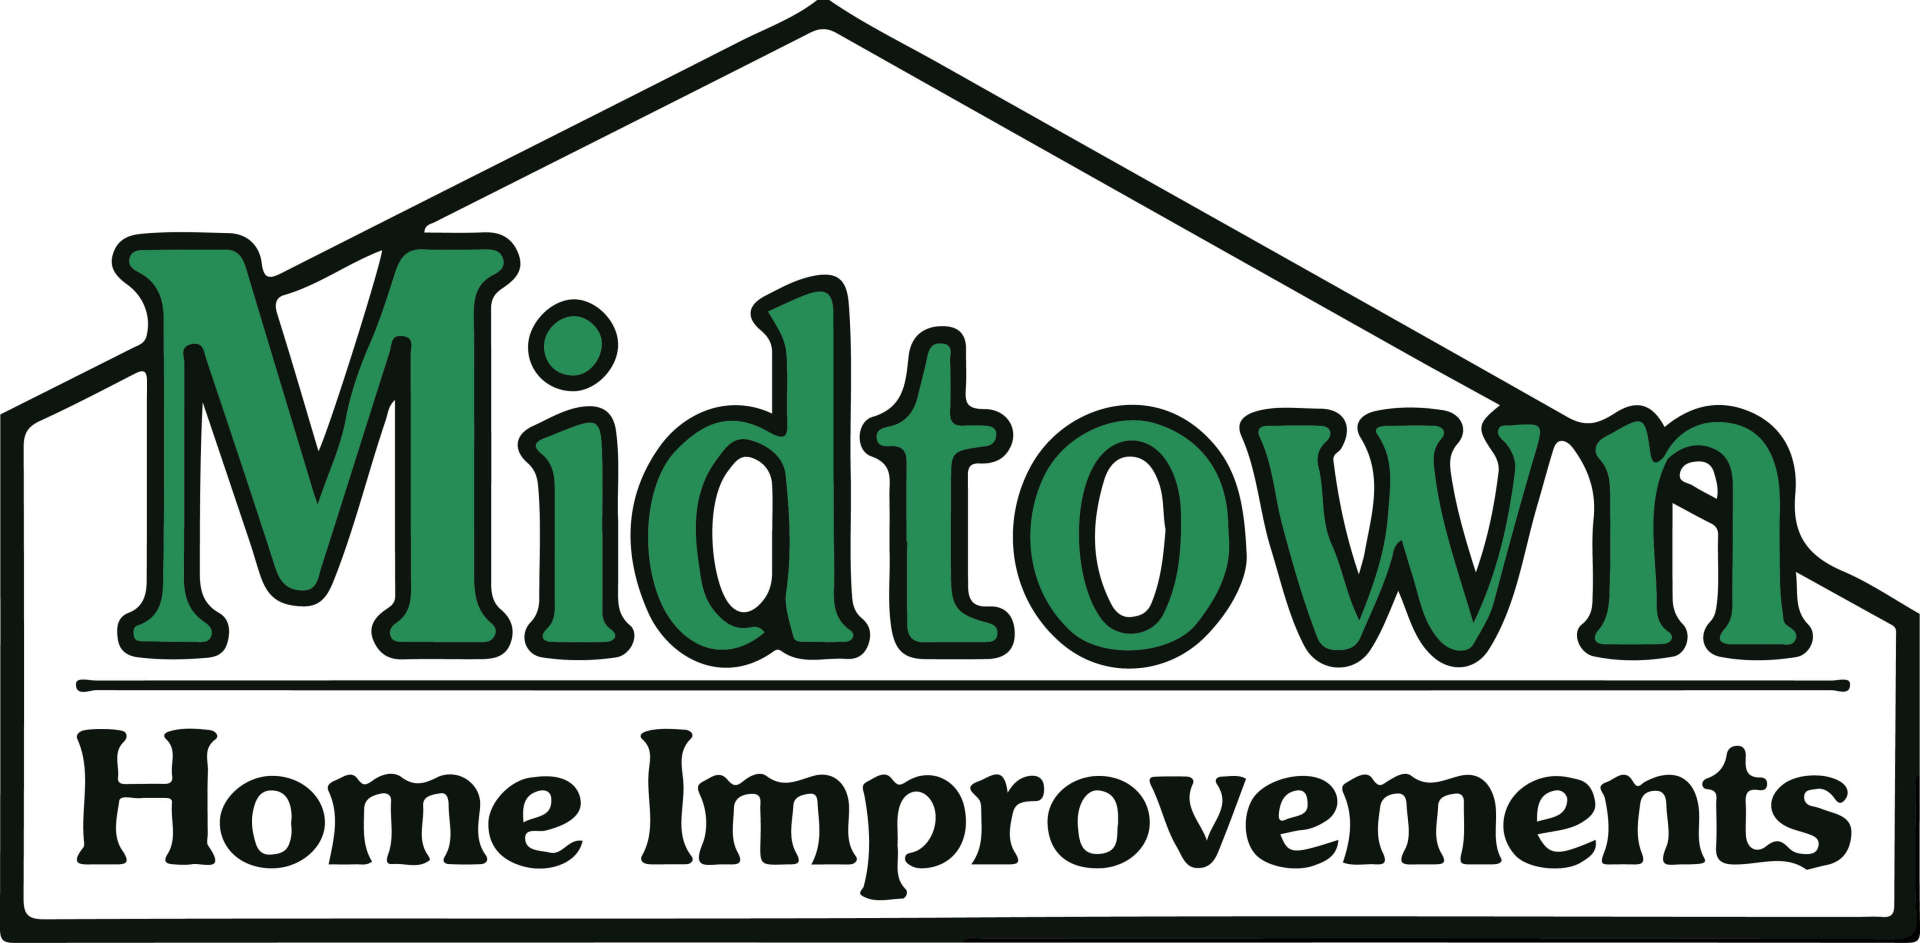 Midtown Home Improvements, Inc. (Nashville) Logo